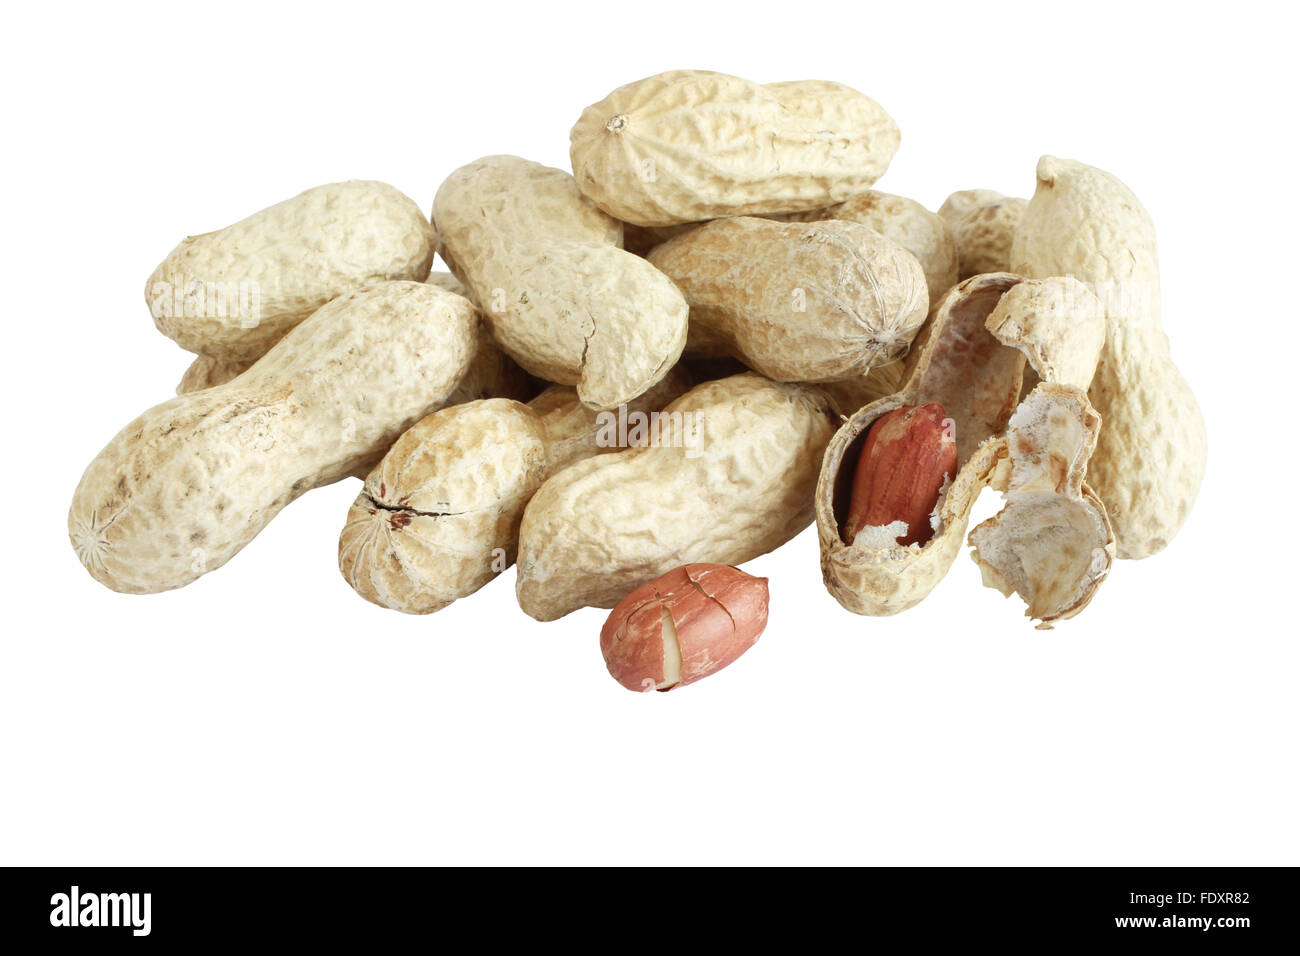 Big unshelled peanuts on white background Stock Photo